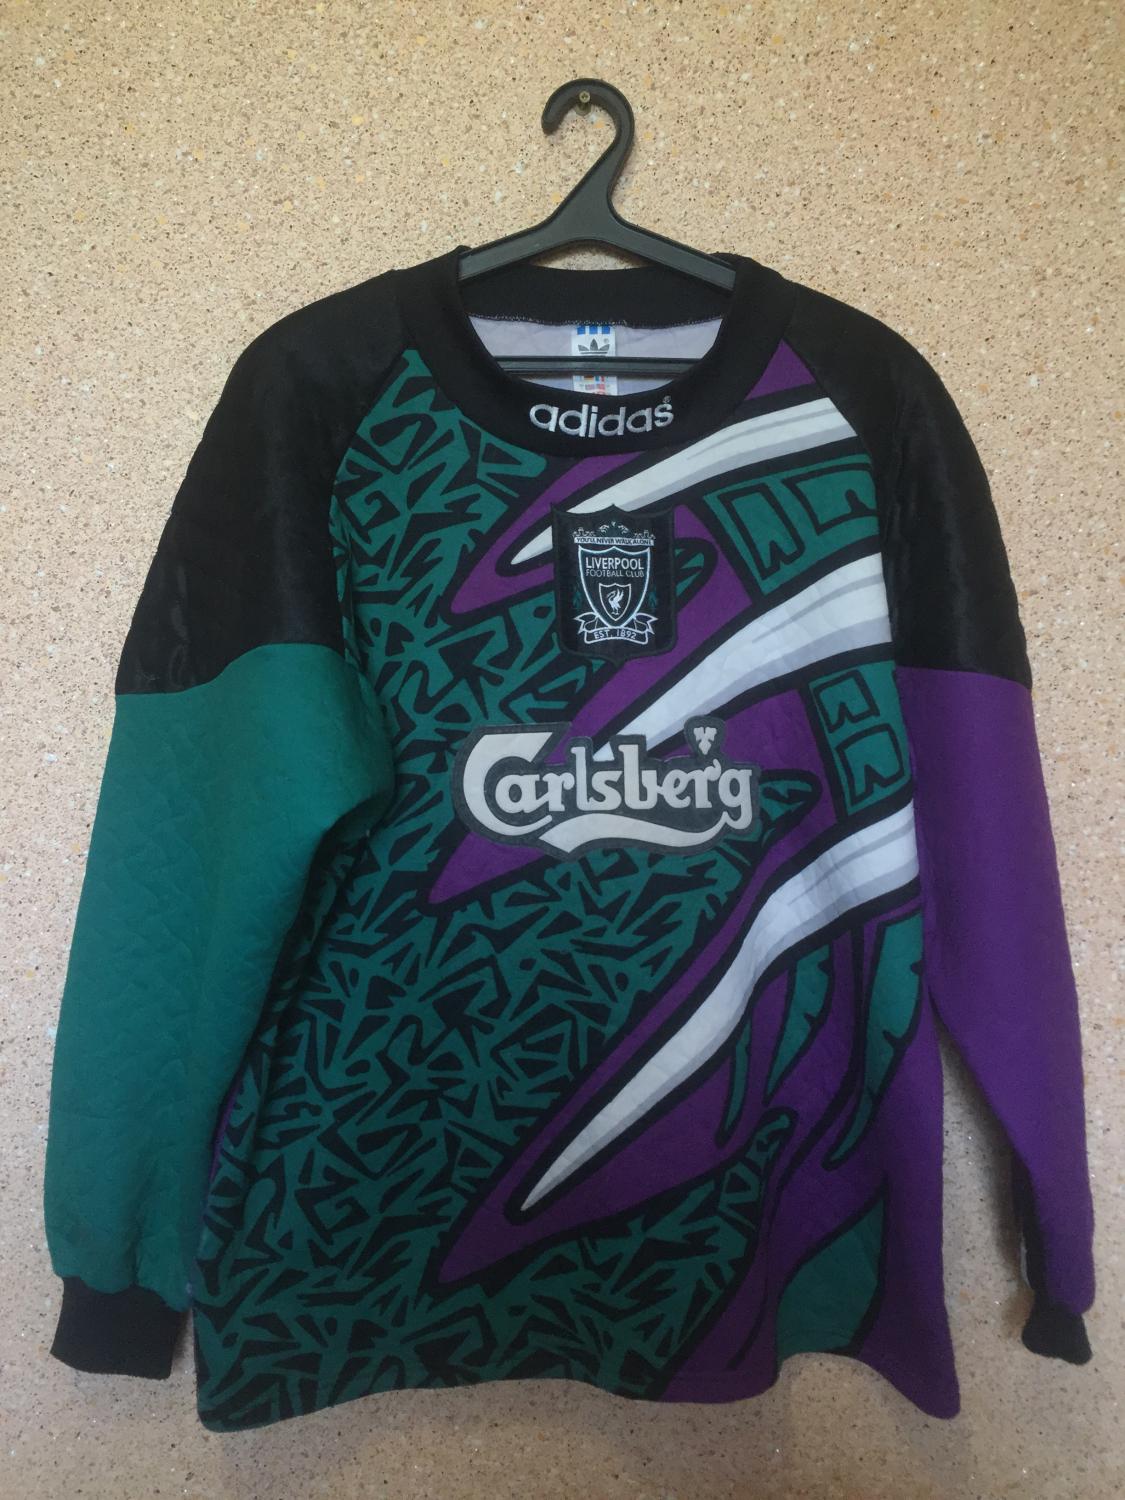 liverpool-goalkeeper-classic-for-sale-football-shirt-1995-1996-s_14988_1.jpg